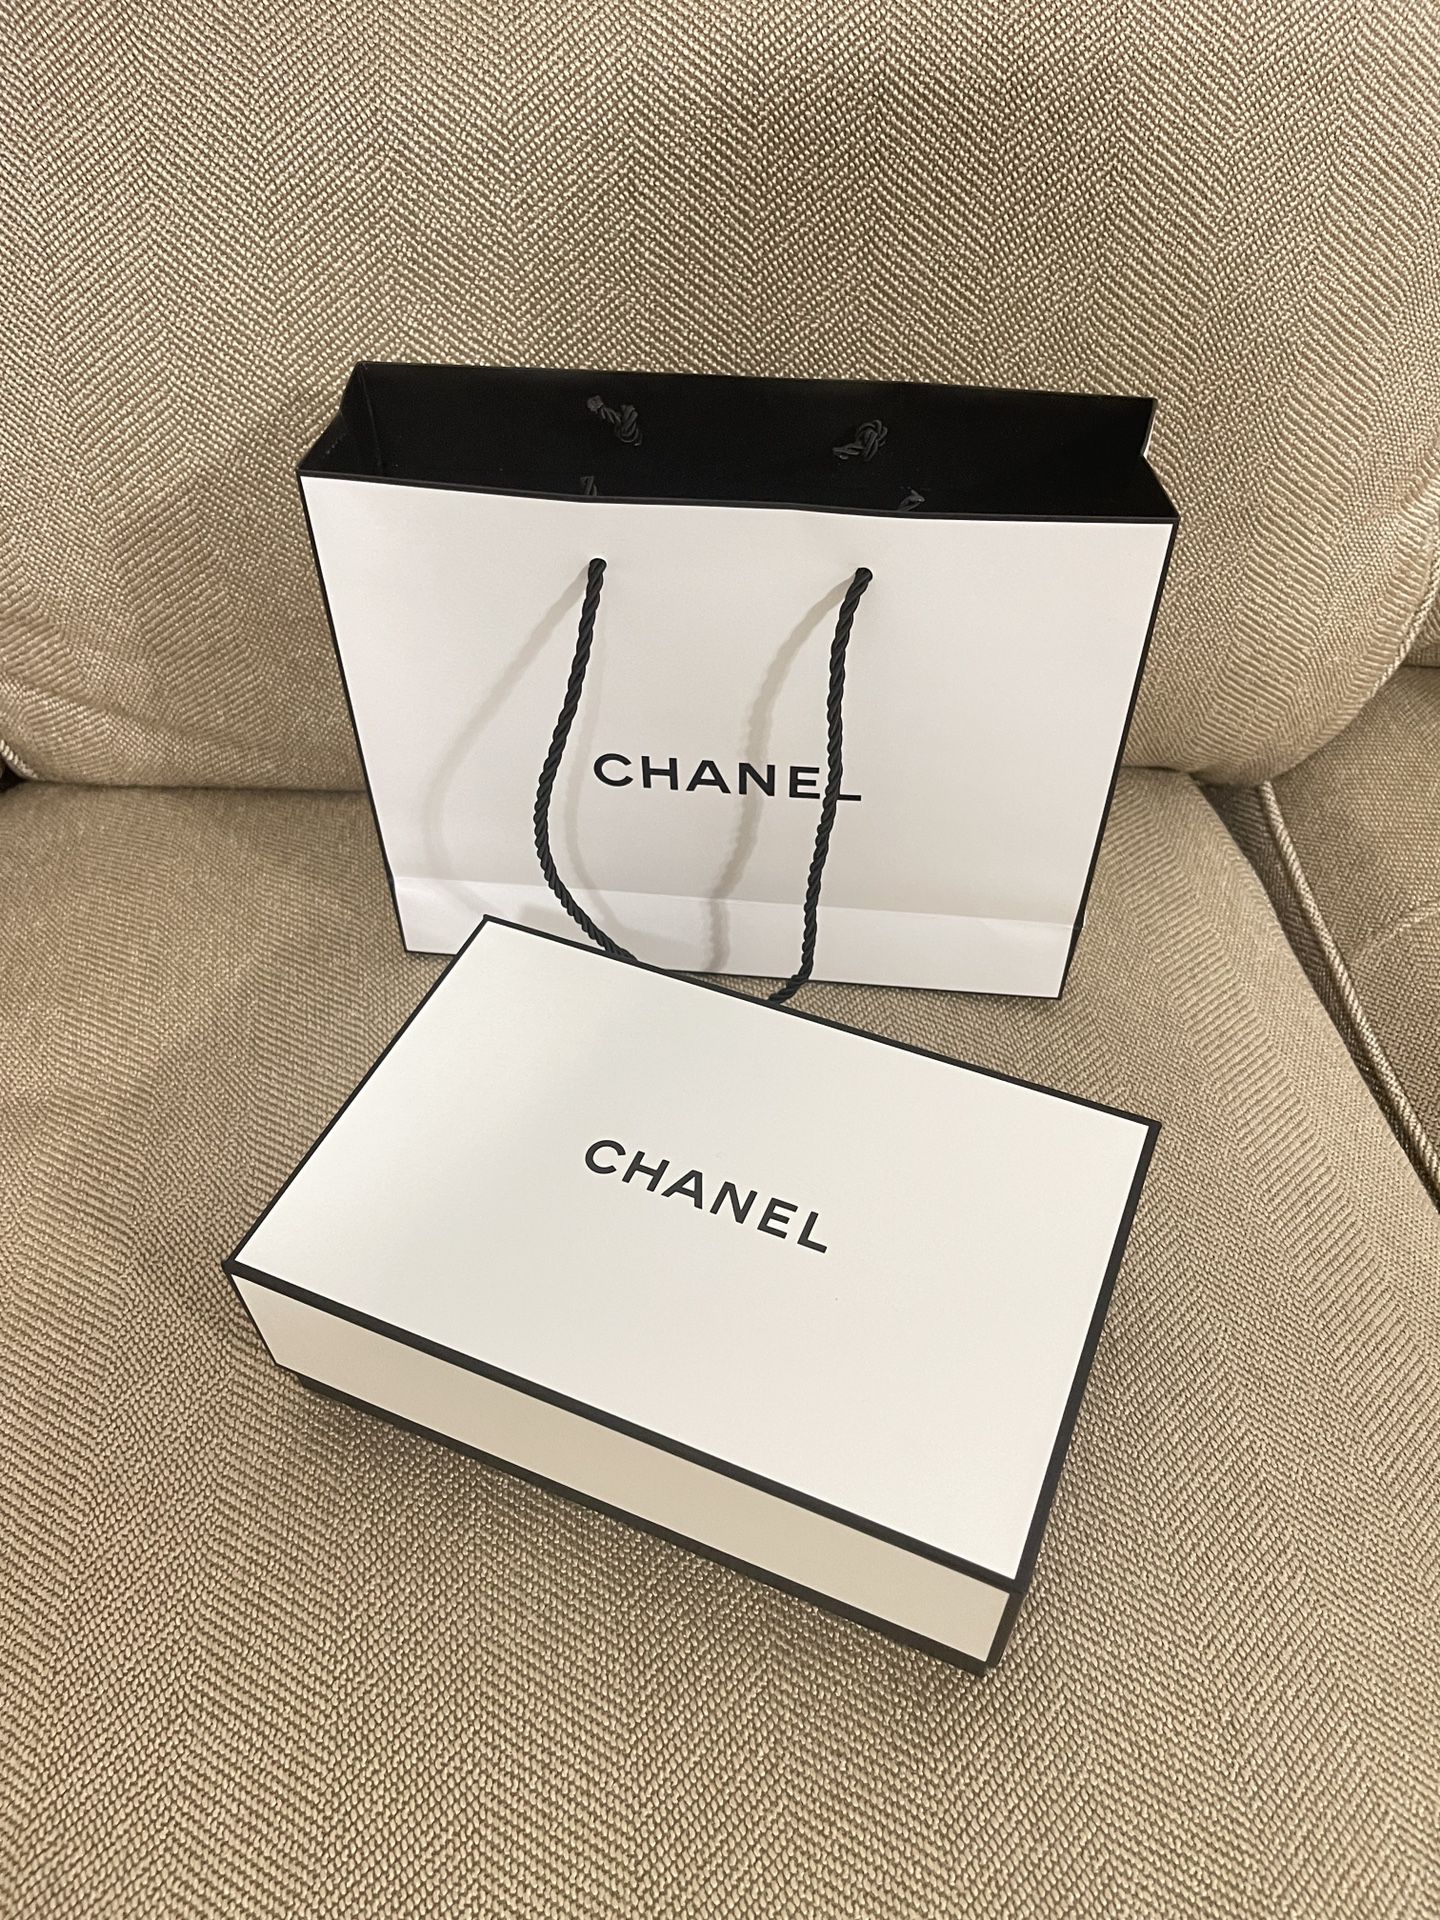 Chanel Gift Box With Gift Bag